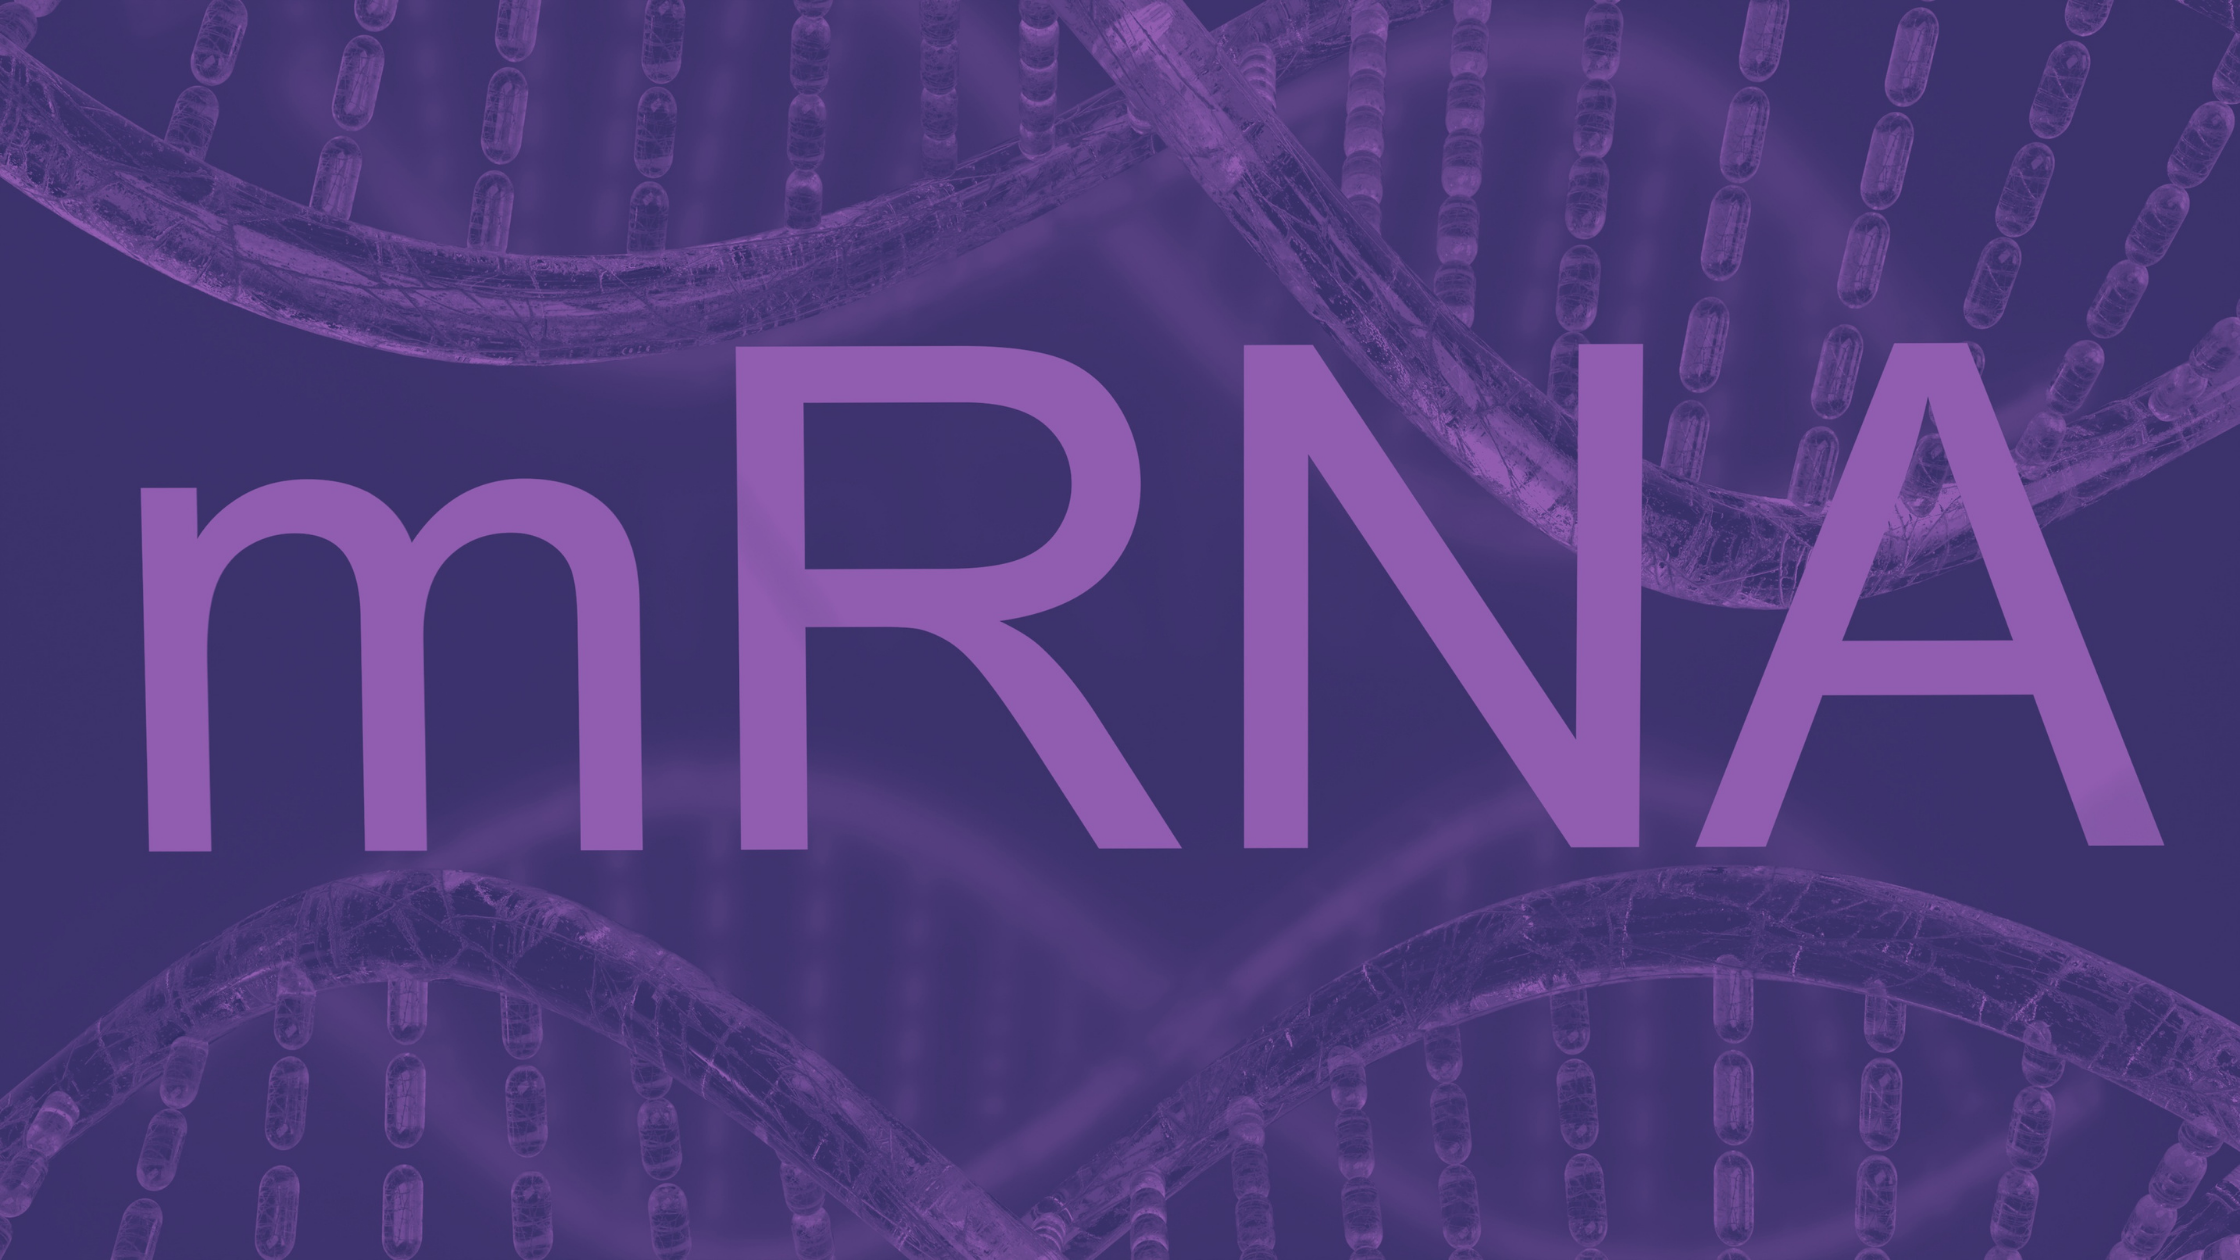 mRNA